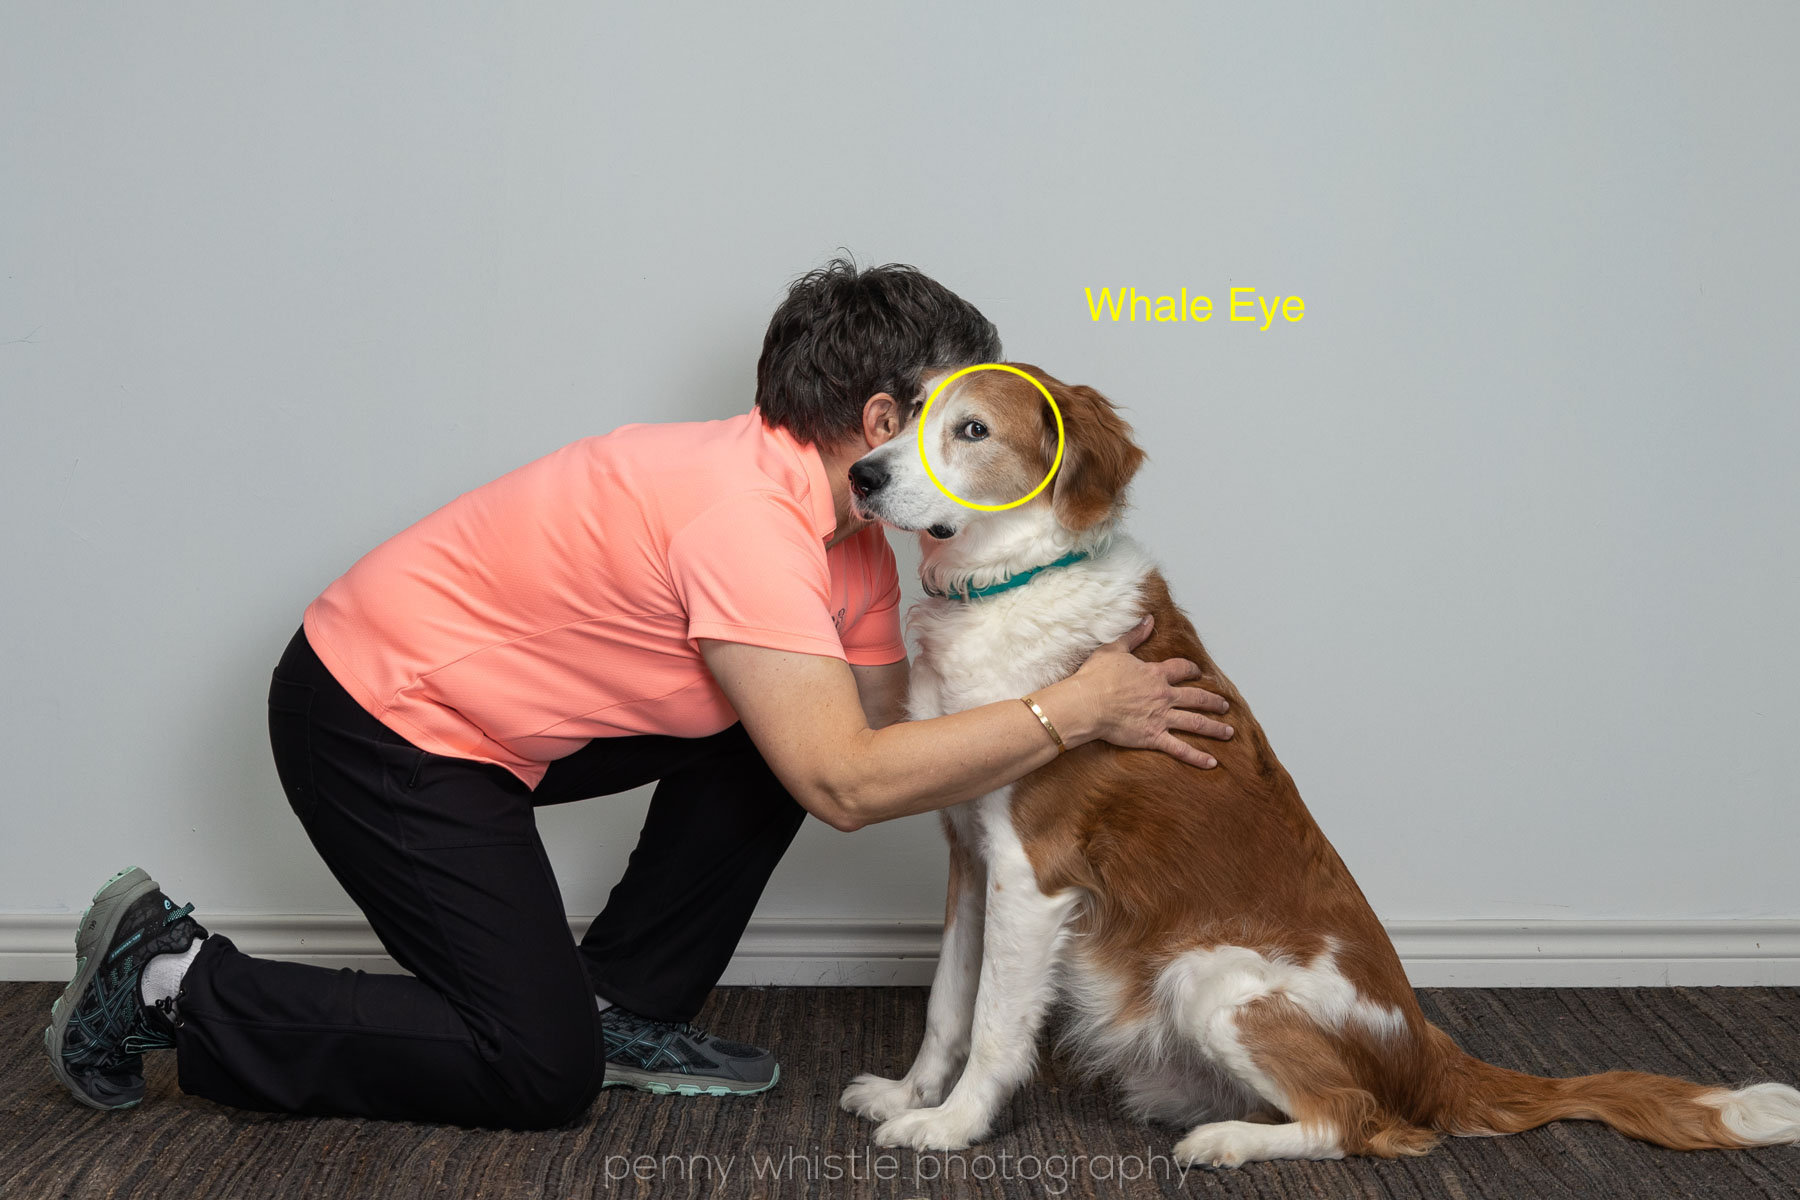 3 Ways to Hug a Dog - wikiHow Pet